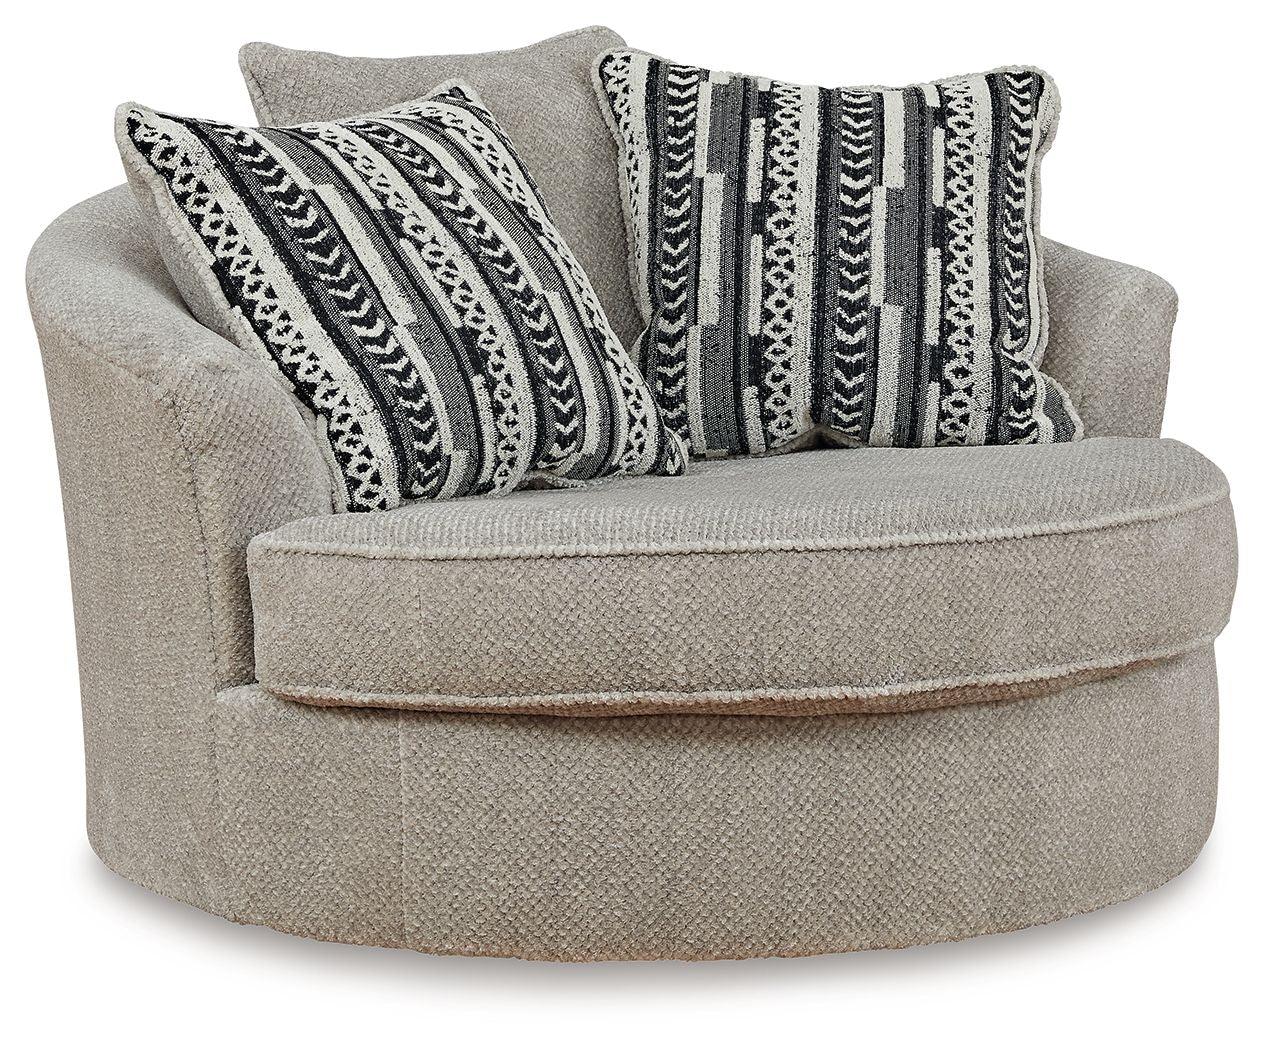 Benchcraft® - Calnita - Living Room Set - 5th Avenue Furniture